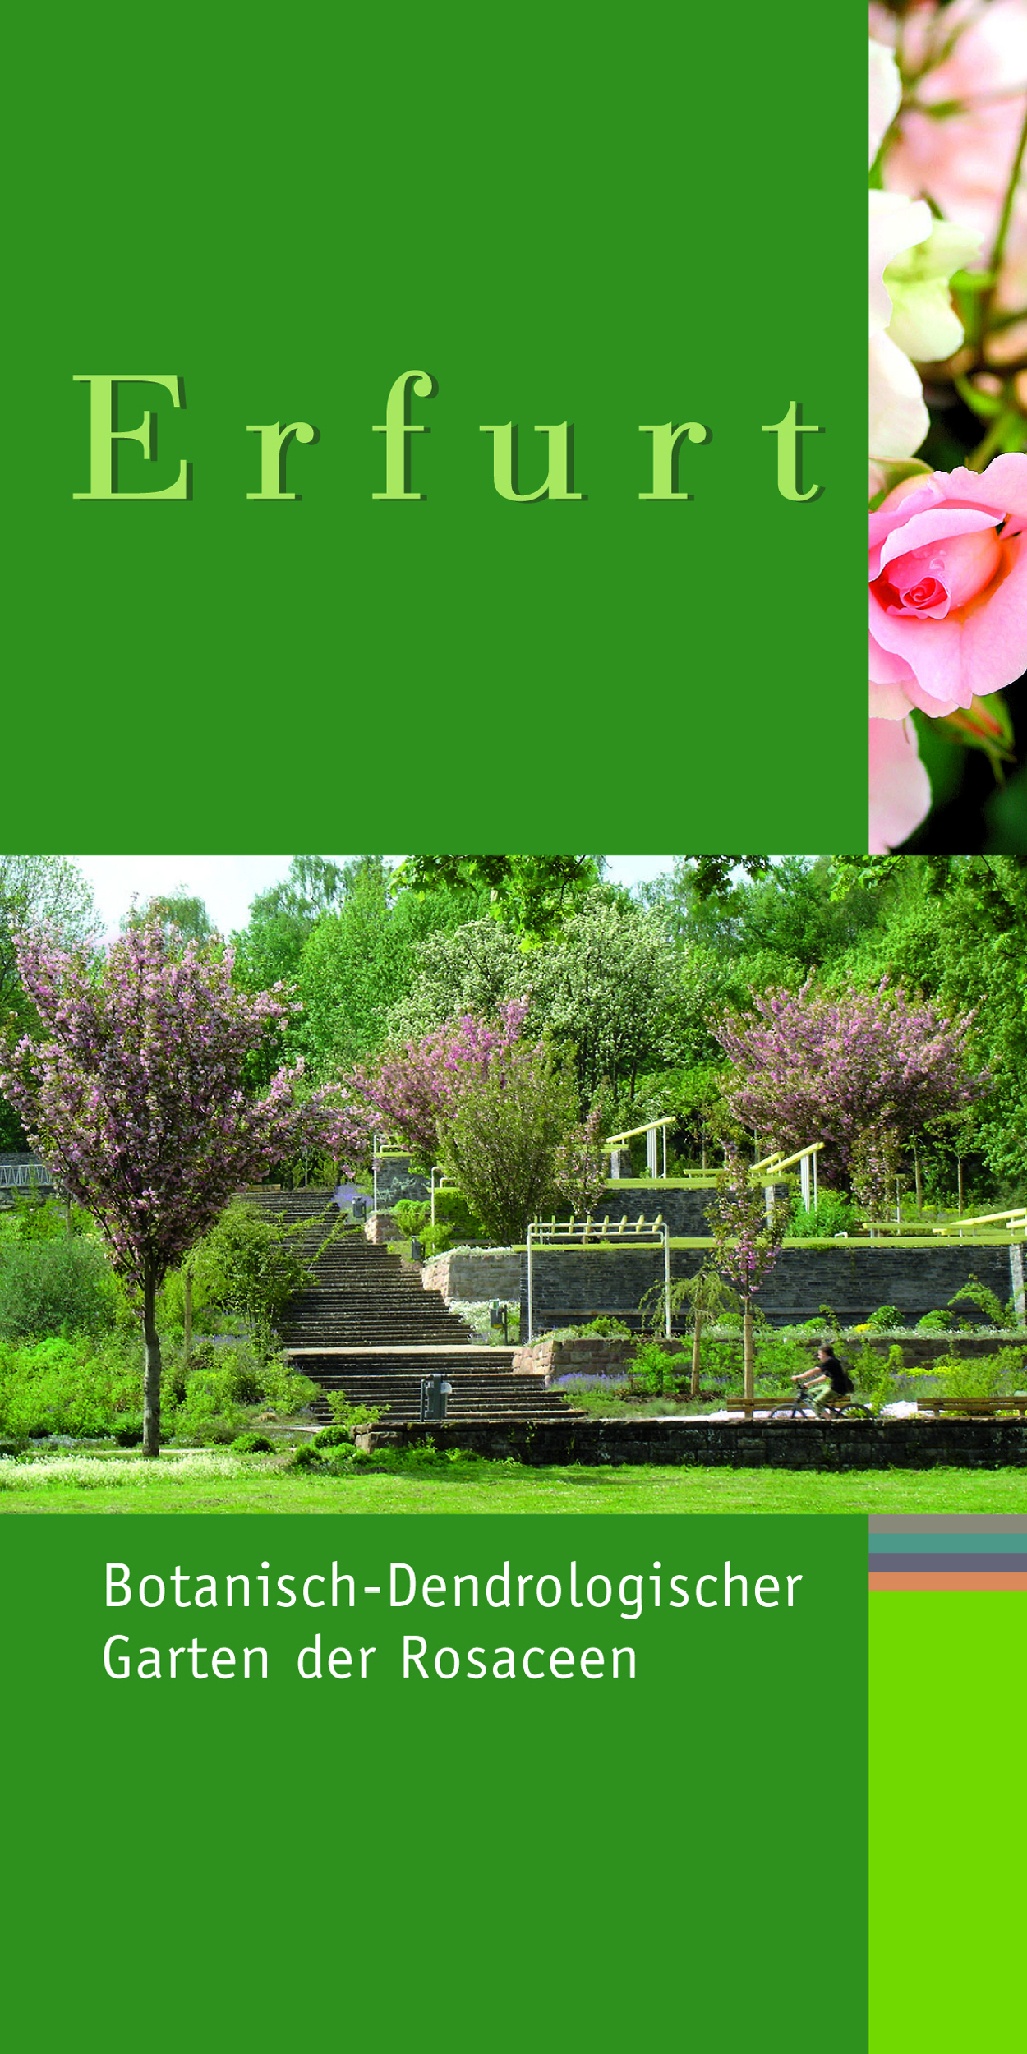 „Erfurts grüne Reihe“, Botanisch-Dendrologischer Garten der Rosaceen, Figure: Dr. Rüdiger Kirsten, Garten- und Friedhofsamt Erfurt